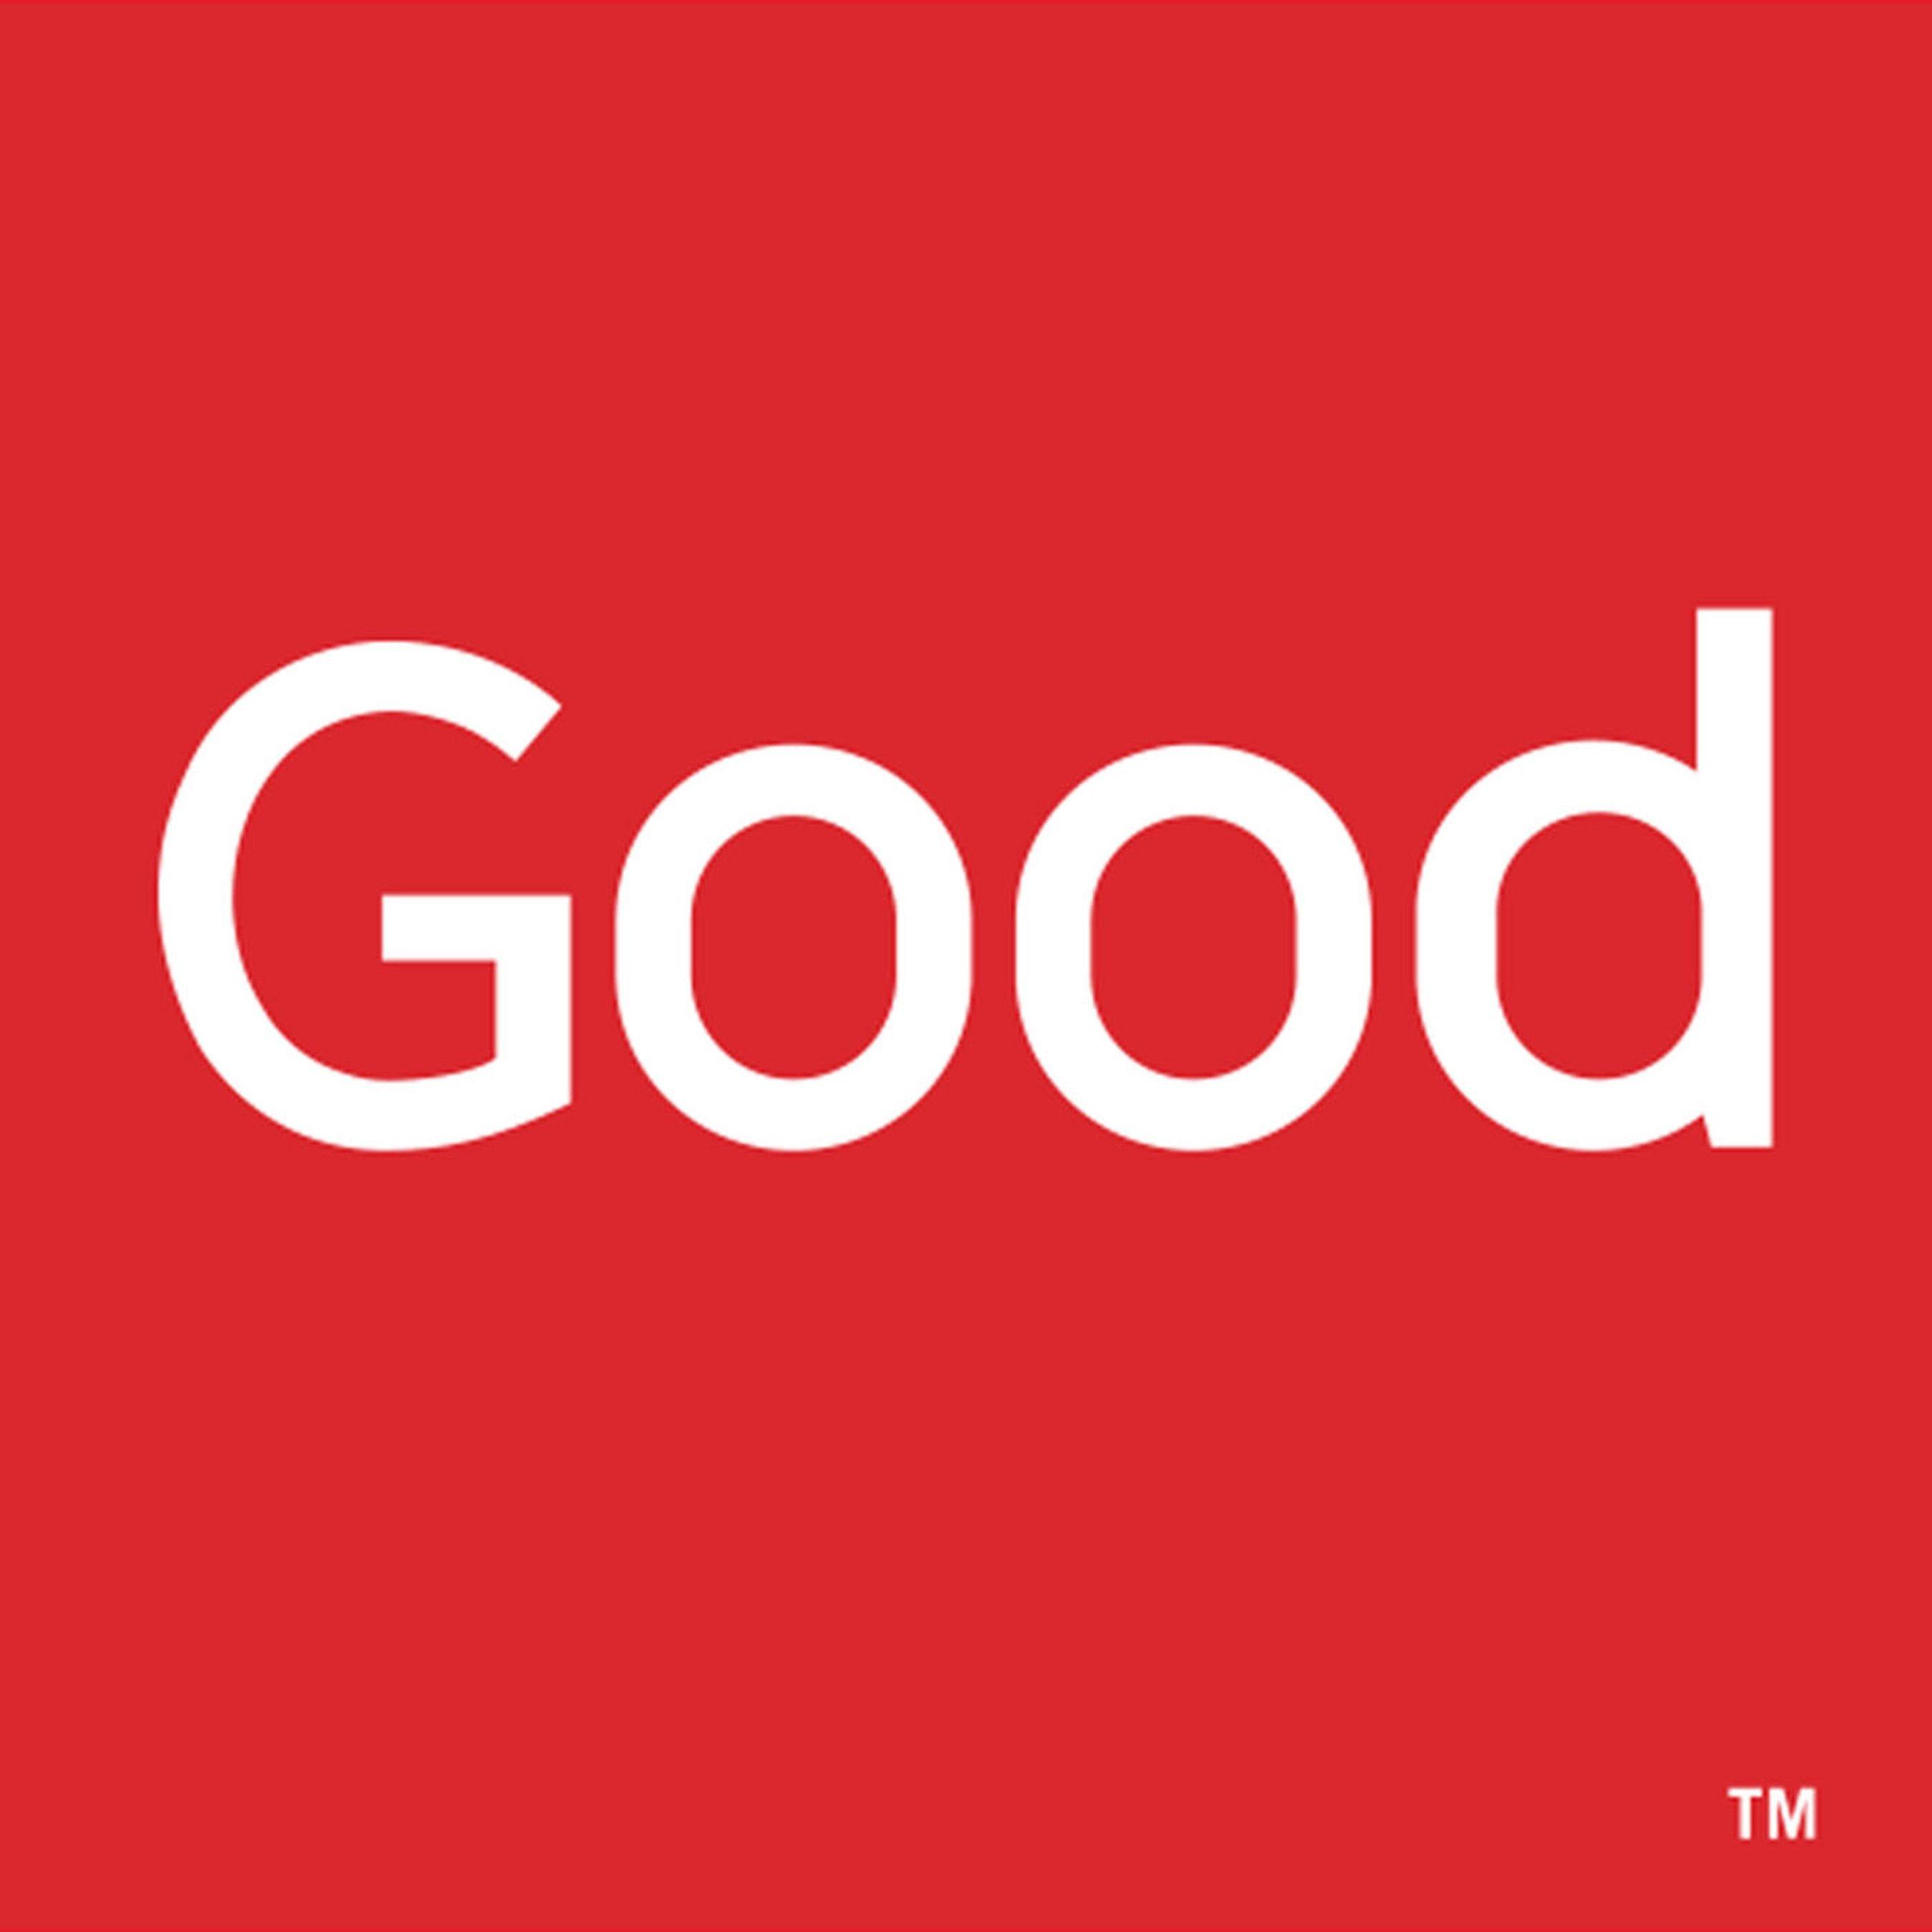 Good App Logo - U.S. Navy Chooses Good Technology to Secure Cross Platform Mobile ...